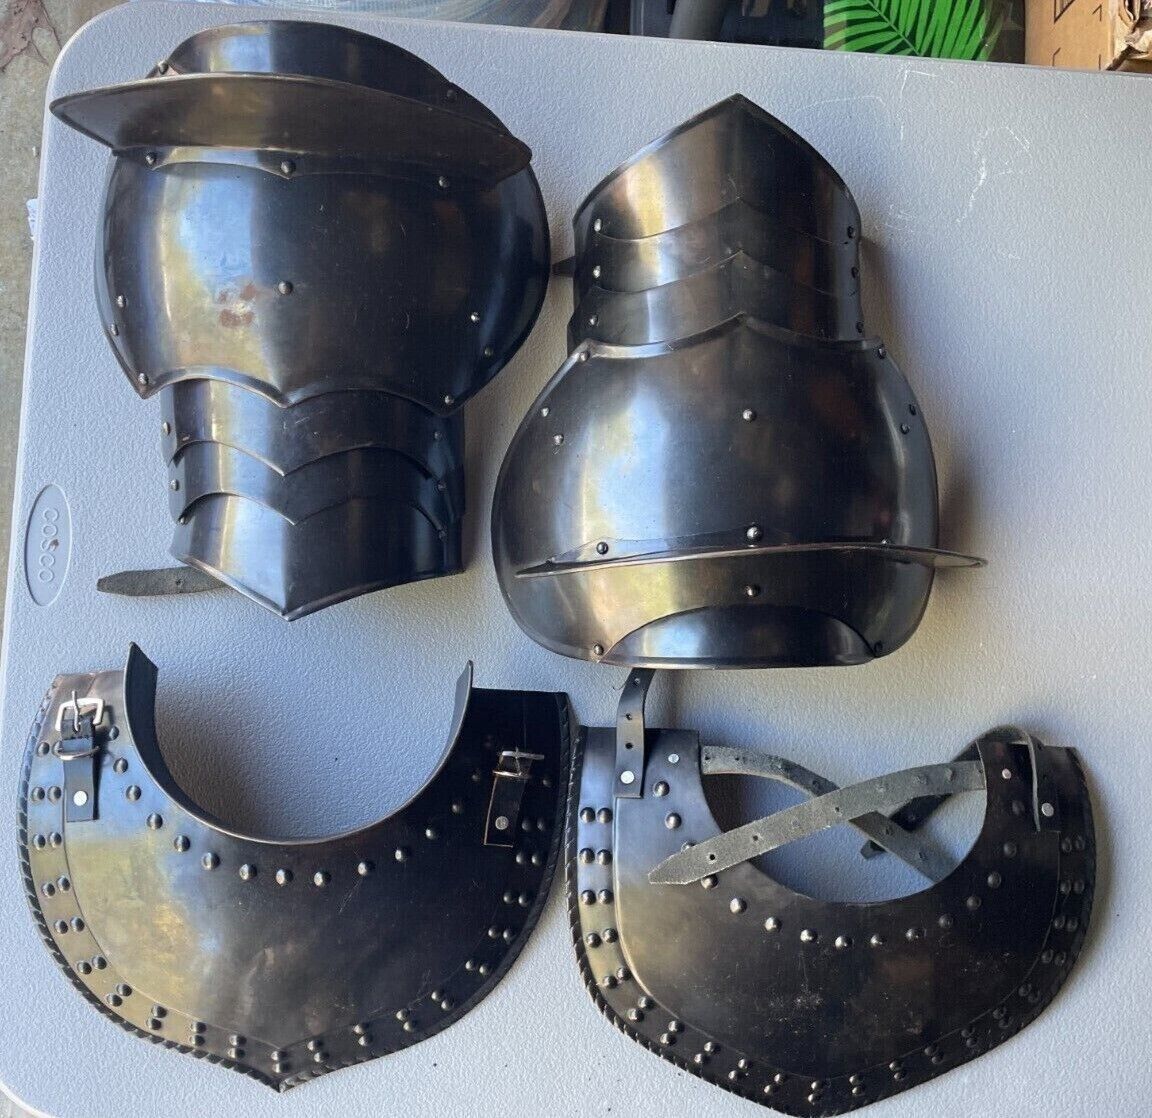 NauticalMart Dark Gothic iron Steel Gorget Neck Armor And Pauldron